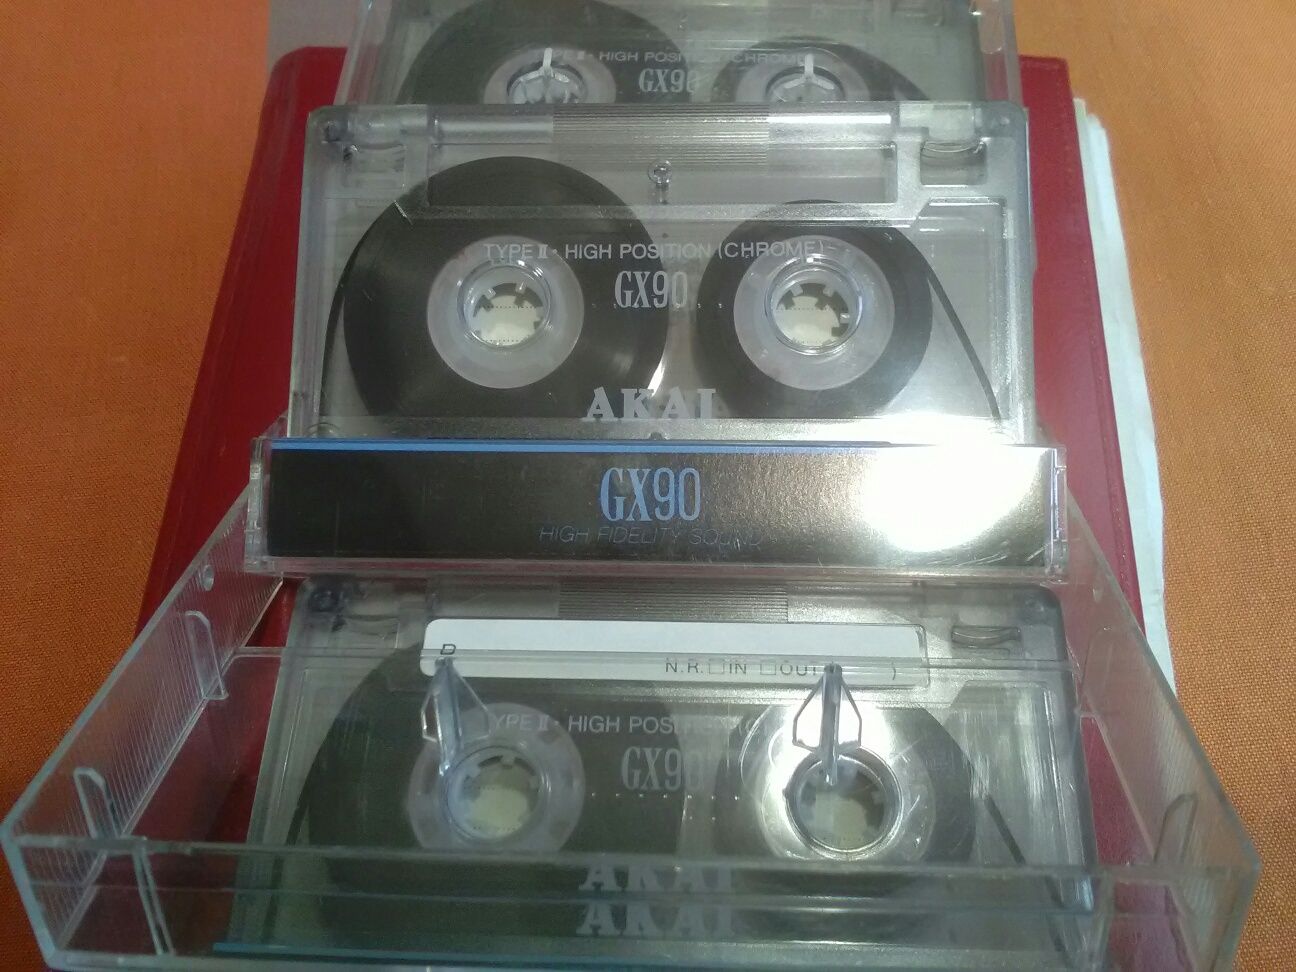 Samsung,Akai,Maxell,SNC аудио кассеты.